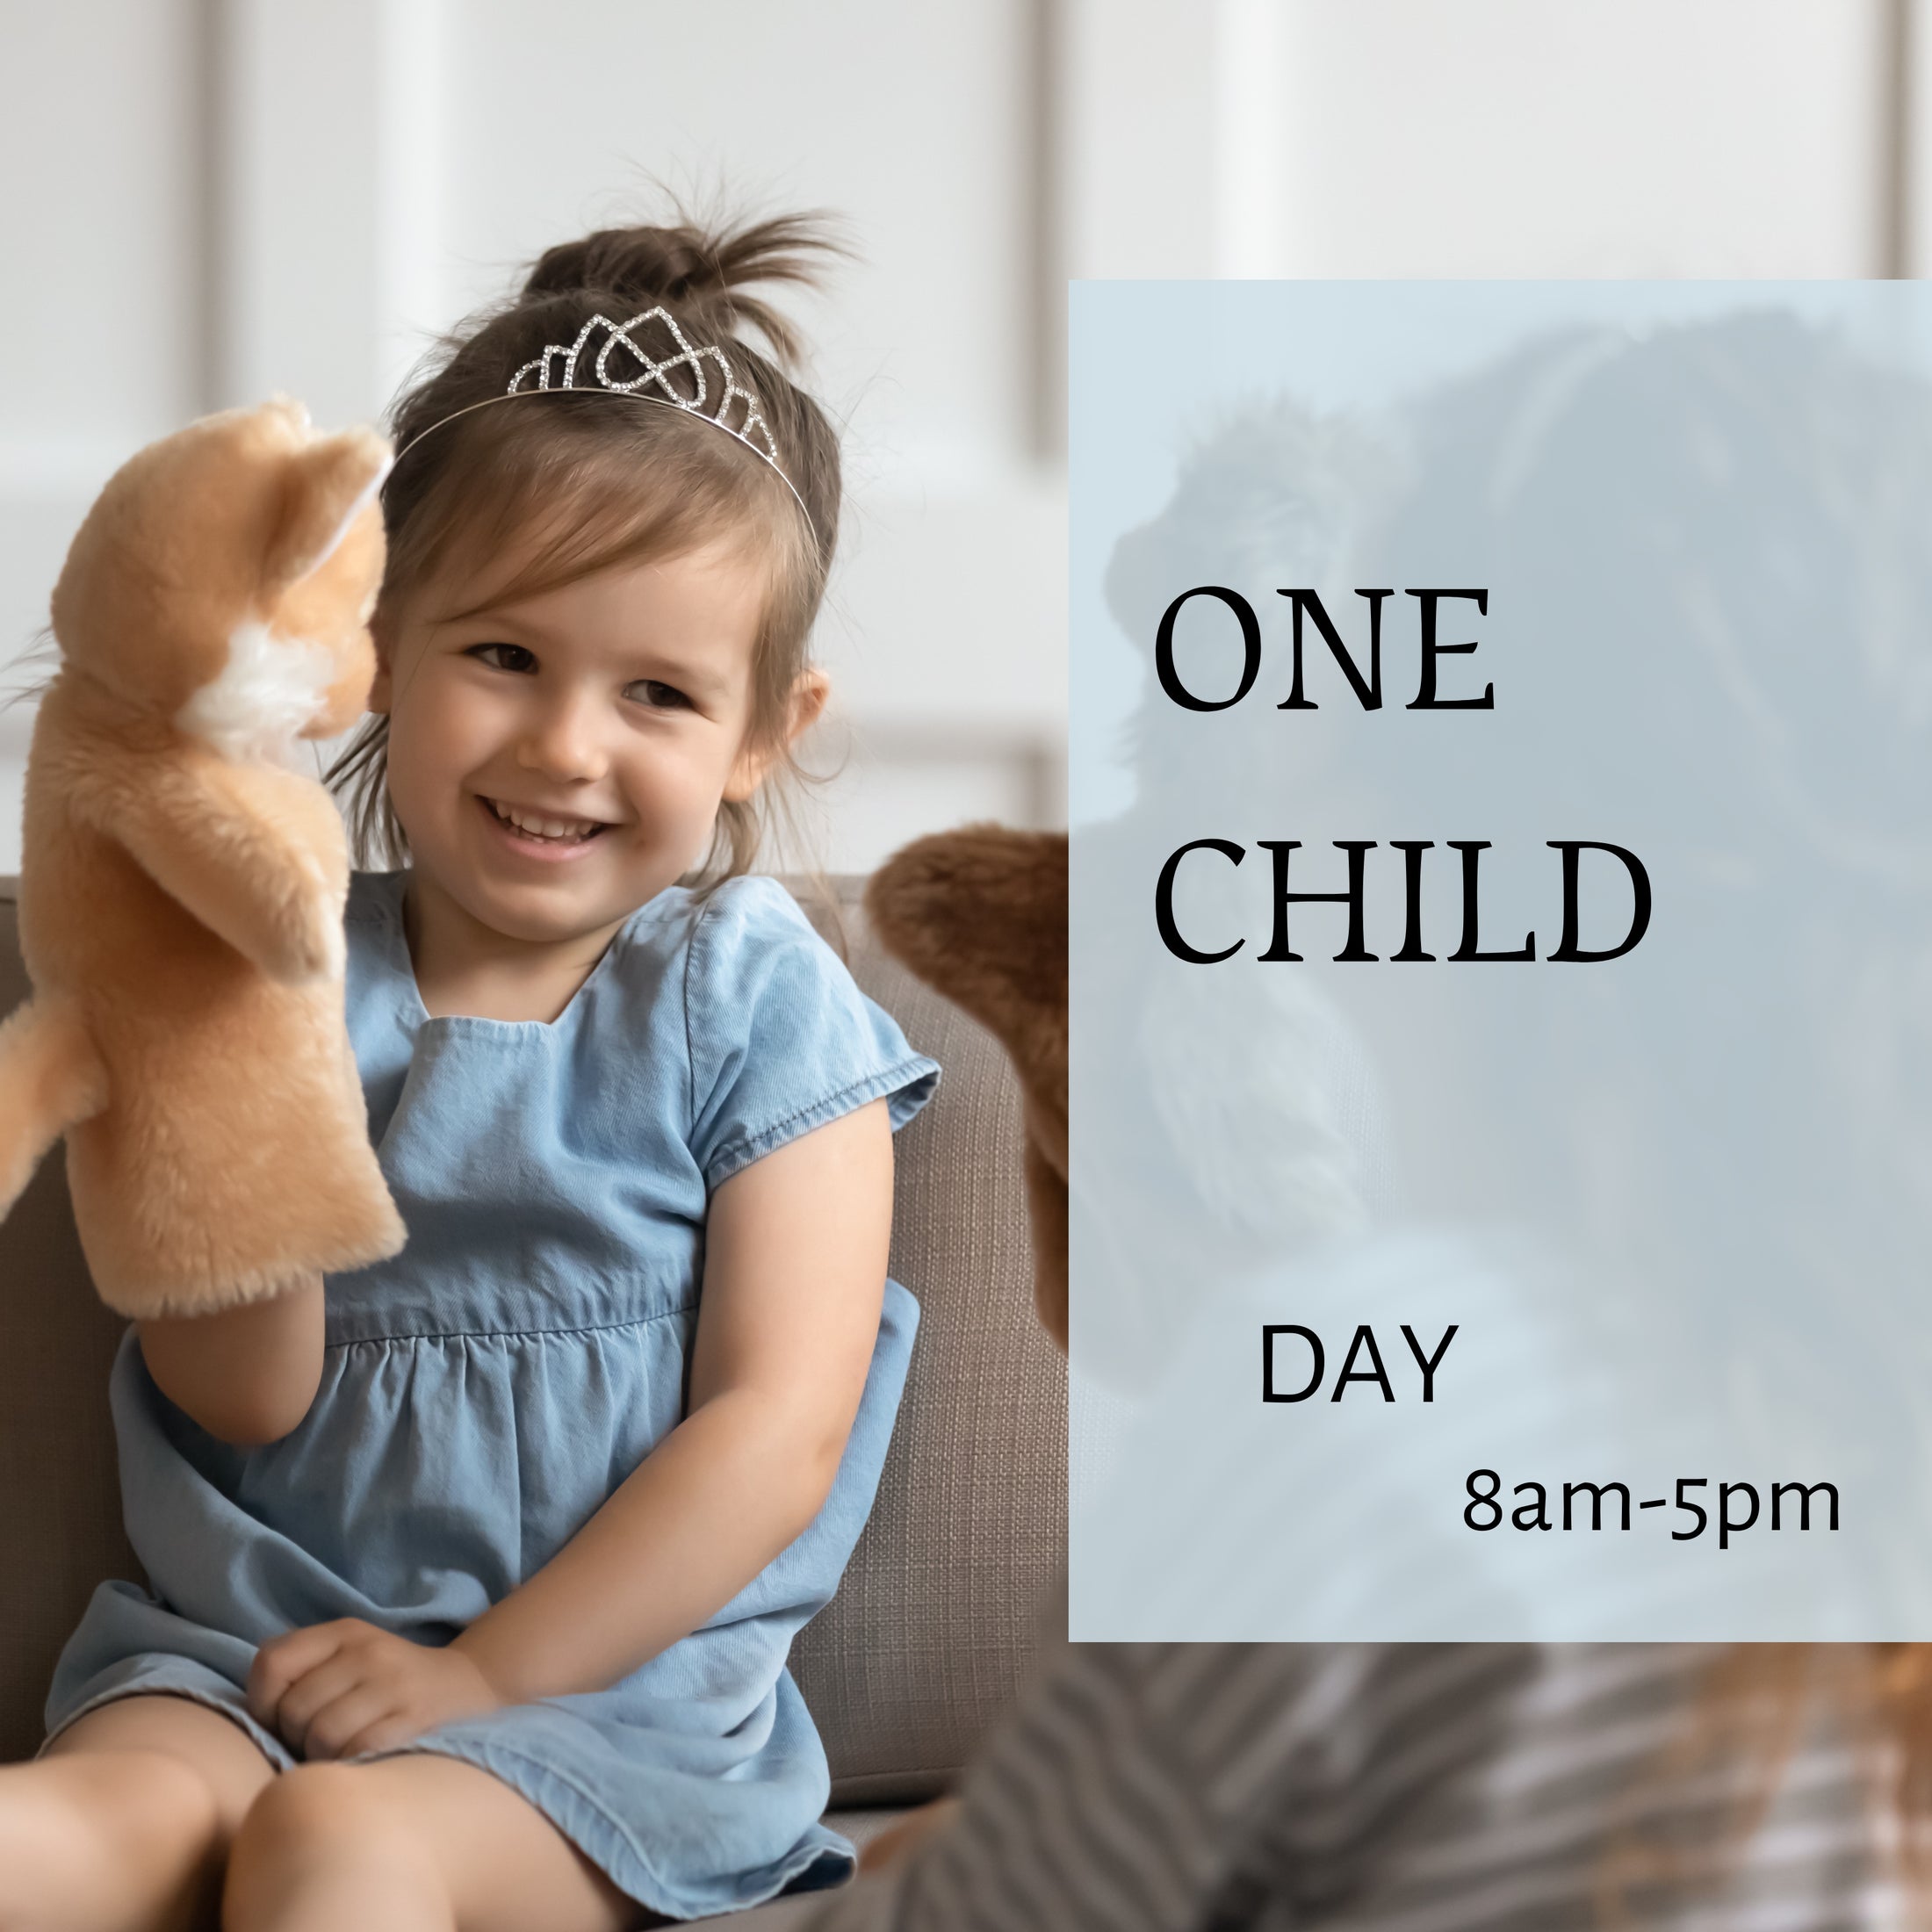 ◆ Day ◆ 1 Child (8AM-5PM)